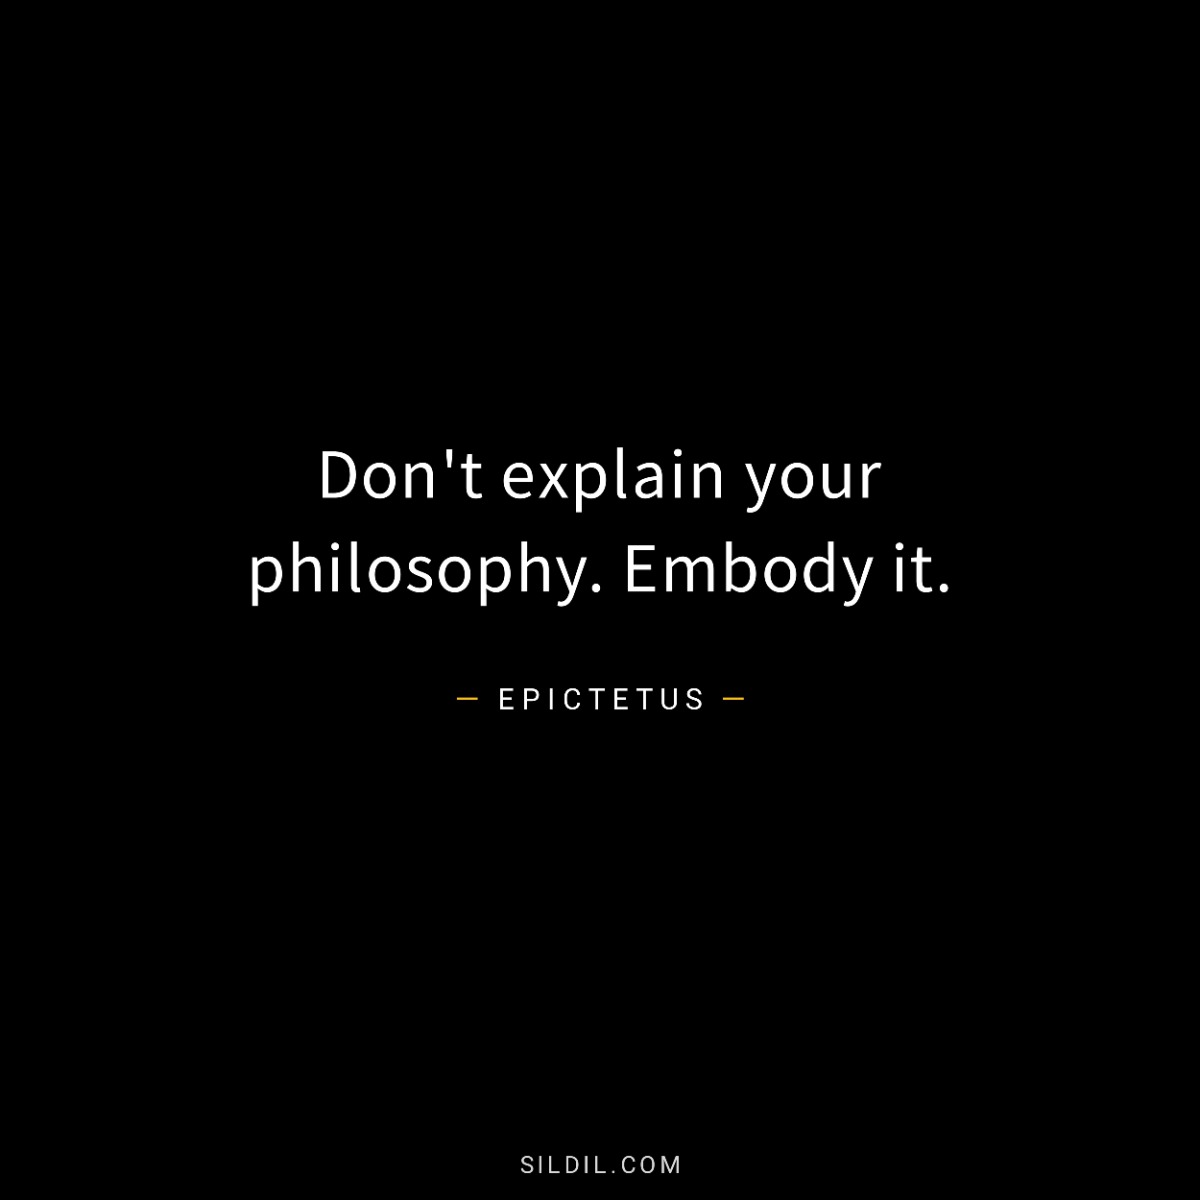 Don't explain your philosophy. Embody it.